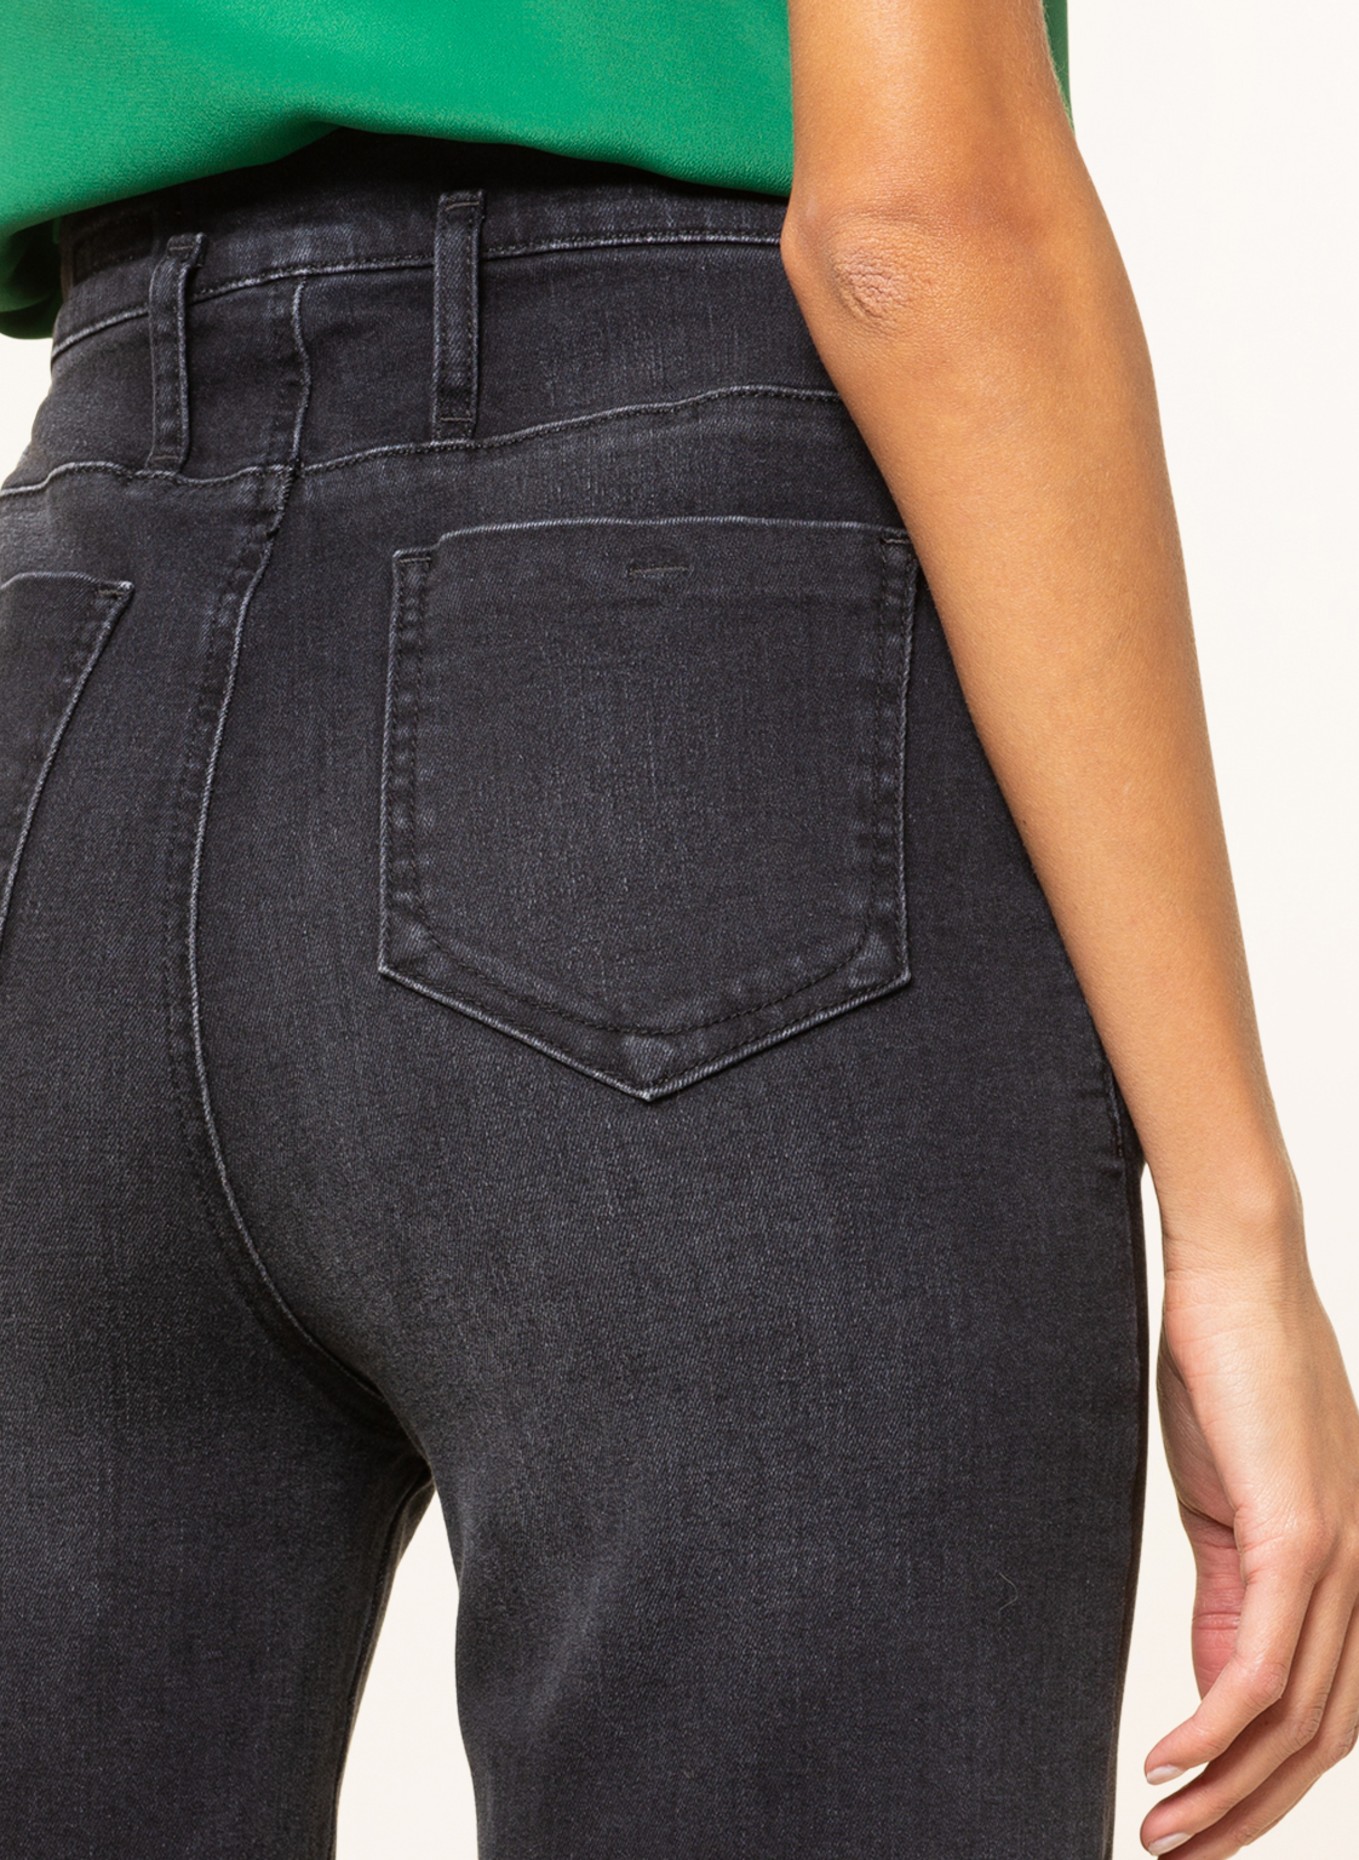 RIANI Flared Jeans , Farbe: 974 black used wash (Bild 5)